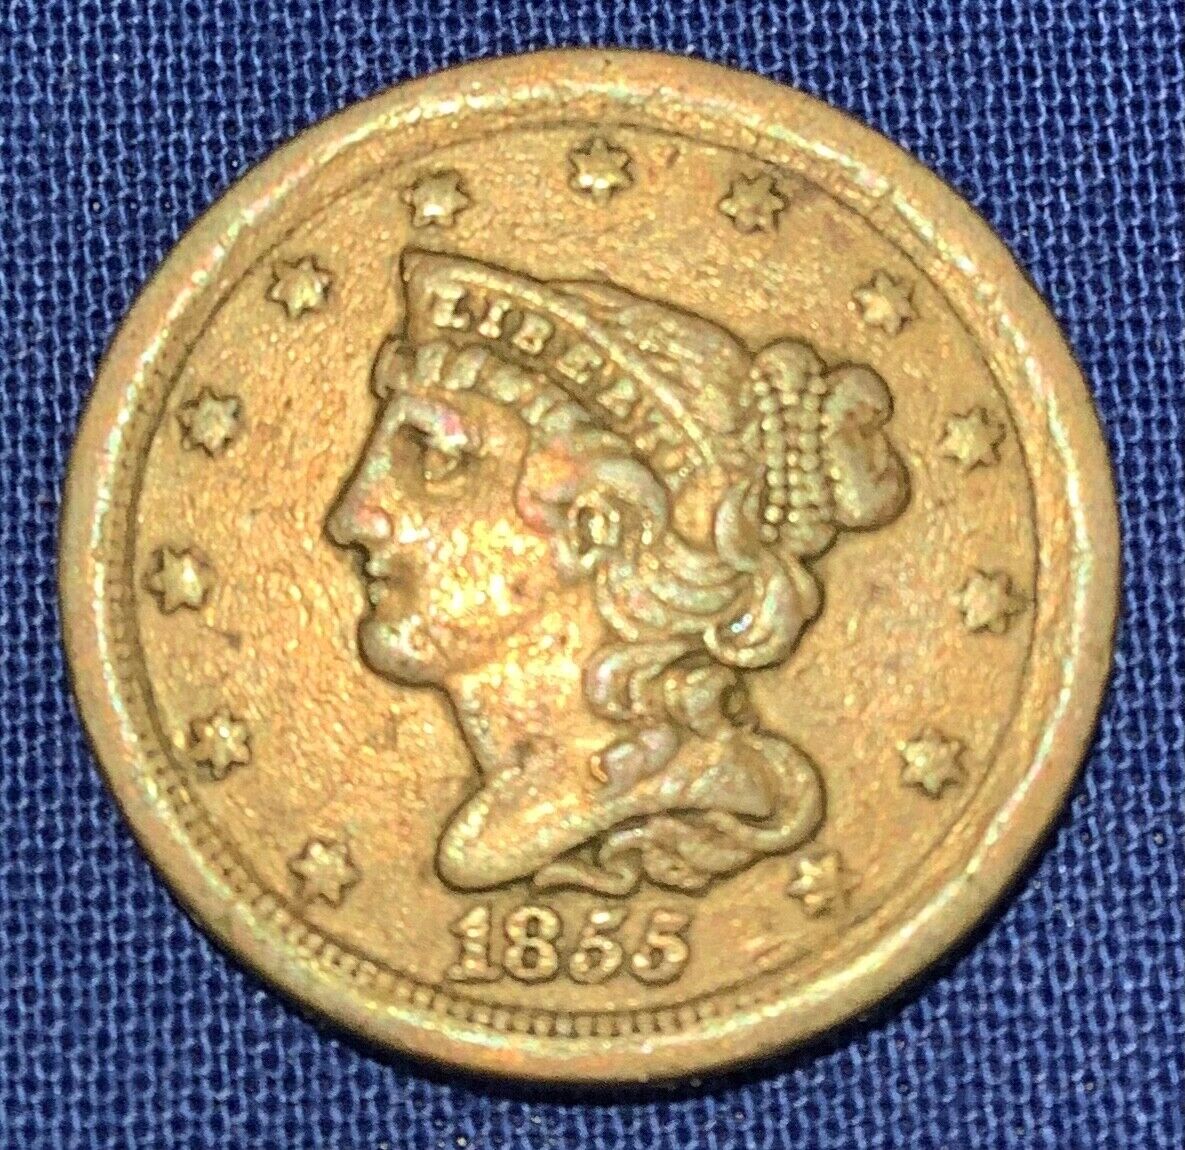 1855 Half Cent, Slanted 5’s Braided Hair Liberty 1/2 Cent, Very Fine